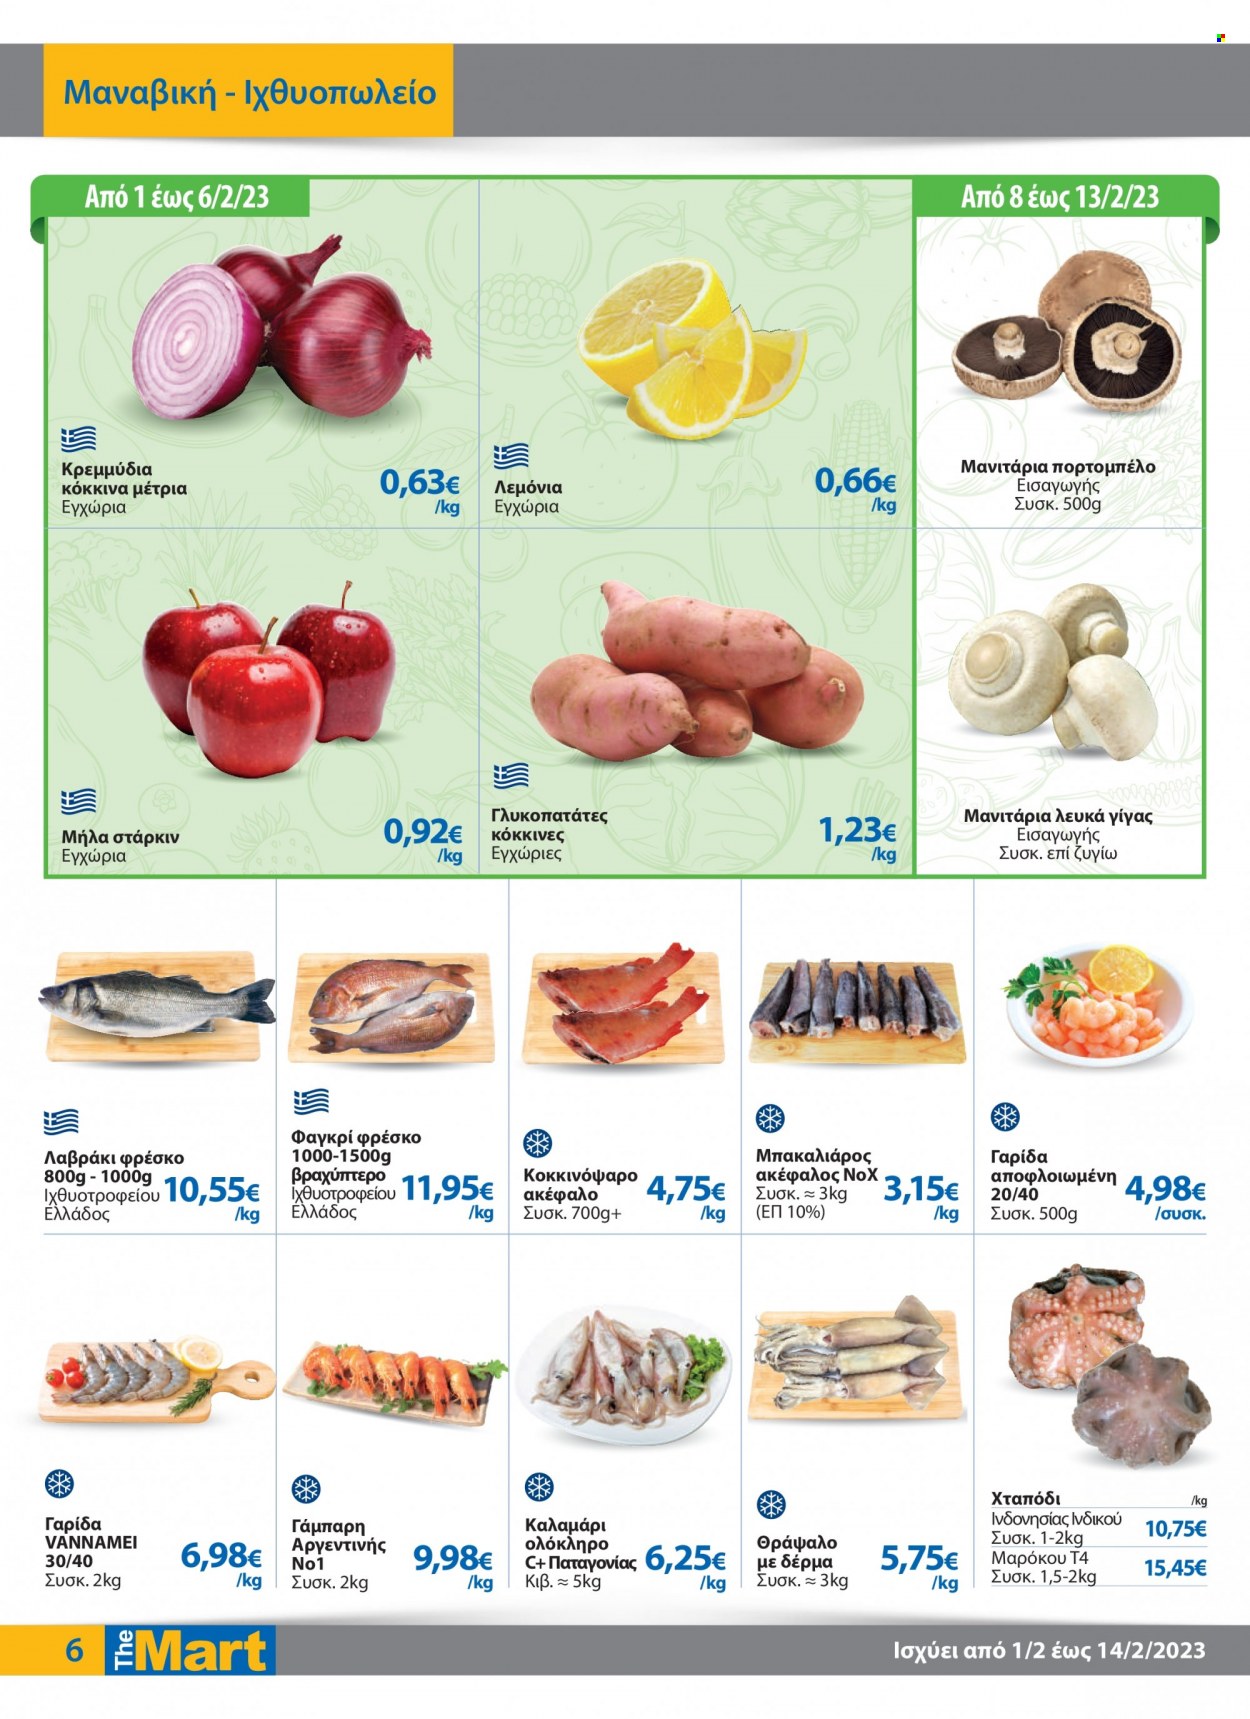 thumbnail - Φυλλάδια The Mart - 01.02.2023 - 14.02.2023 - Εκπτωτικά προϊόντα - κρεμμύδια, γλυκοπατάτες, μήλα, κοκκινόψαρο, λαβράκι, χταπόδι, μπακαλιαρος, φαγκρι, καλαμάρι. Σελίδα 6.